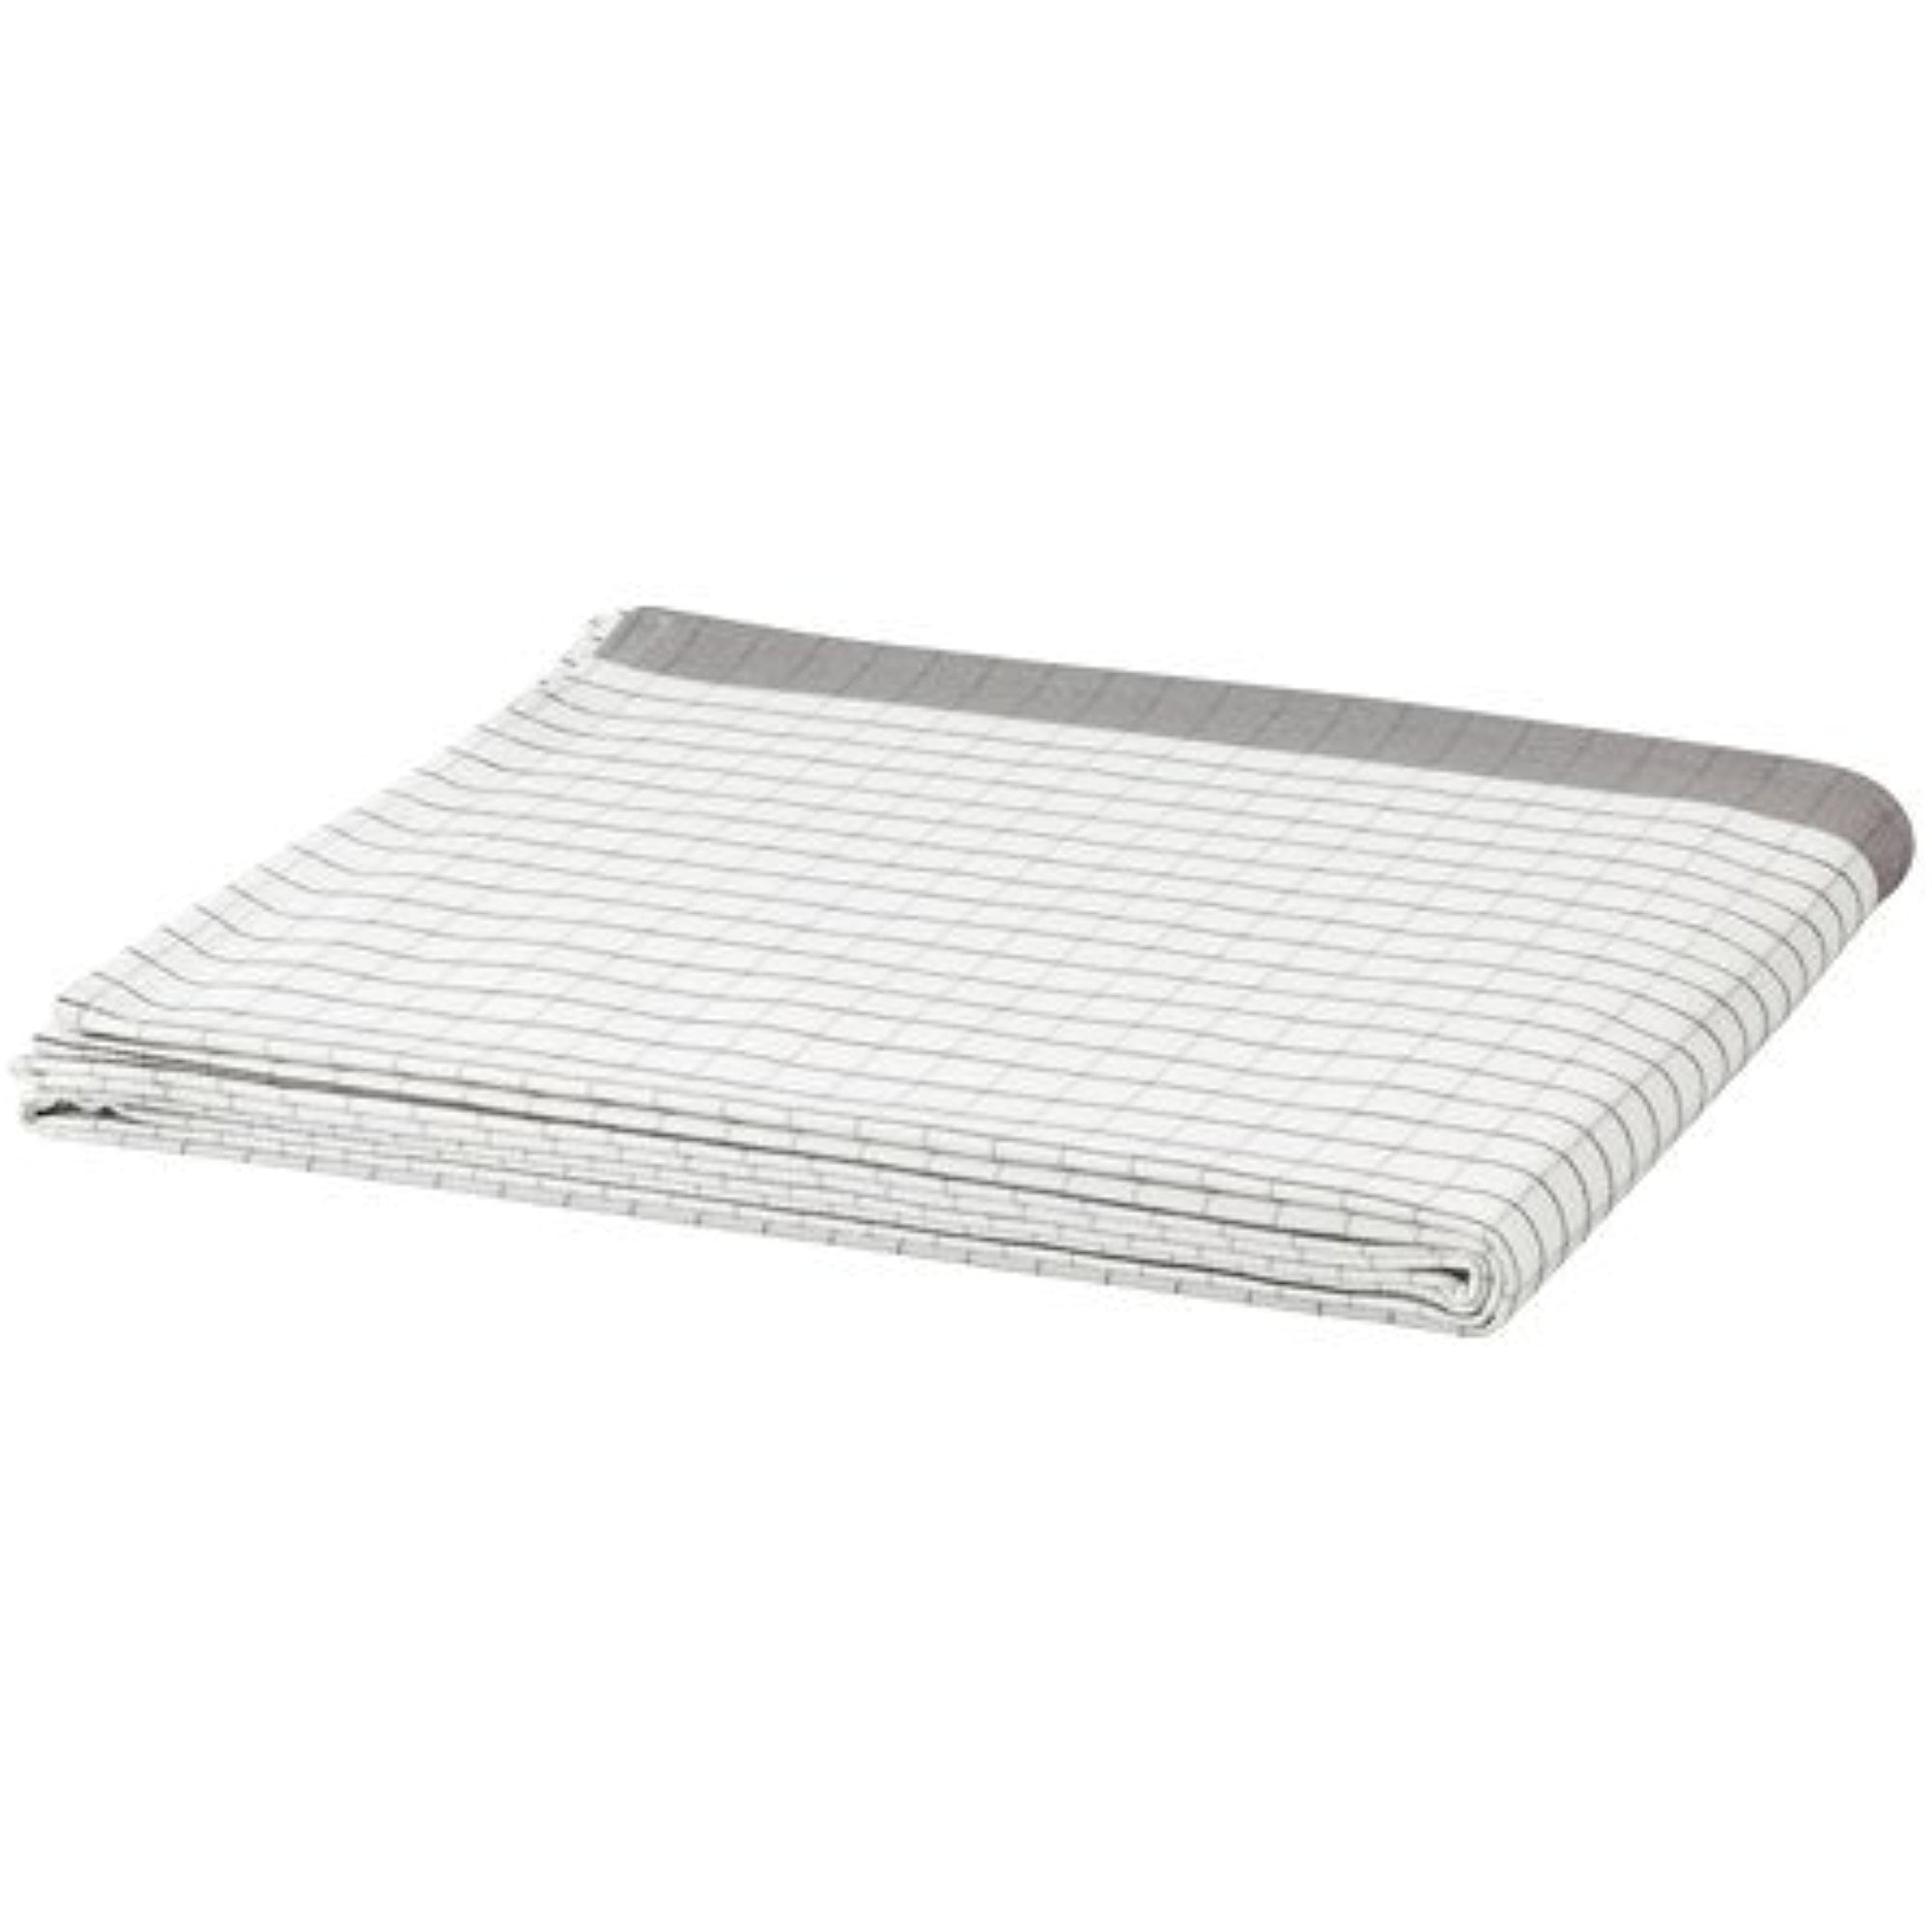 Tablecloth, white, gray 57x126 ", 426.172326.622 - Walmart.com